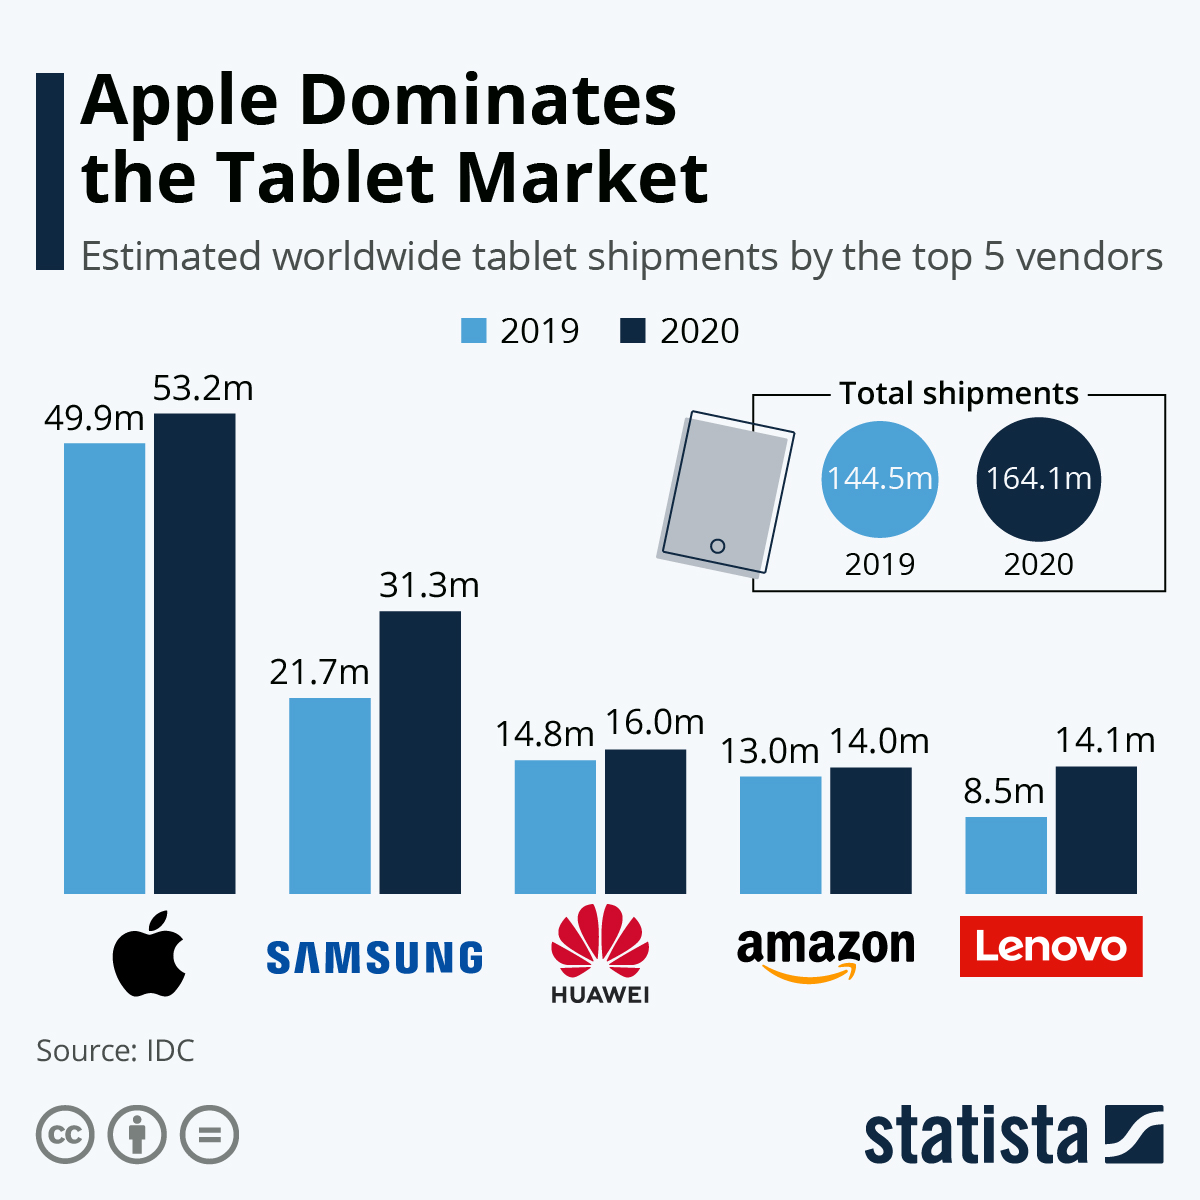 Apple Dominates the Tablet Market